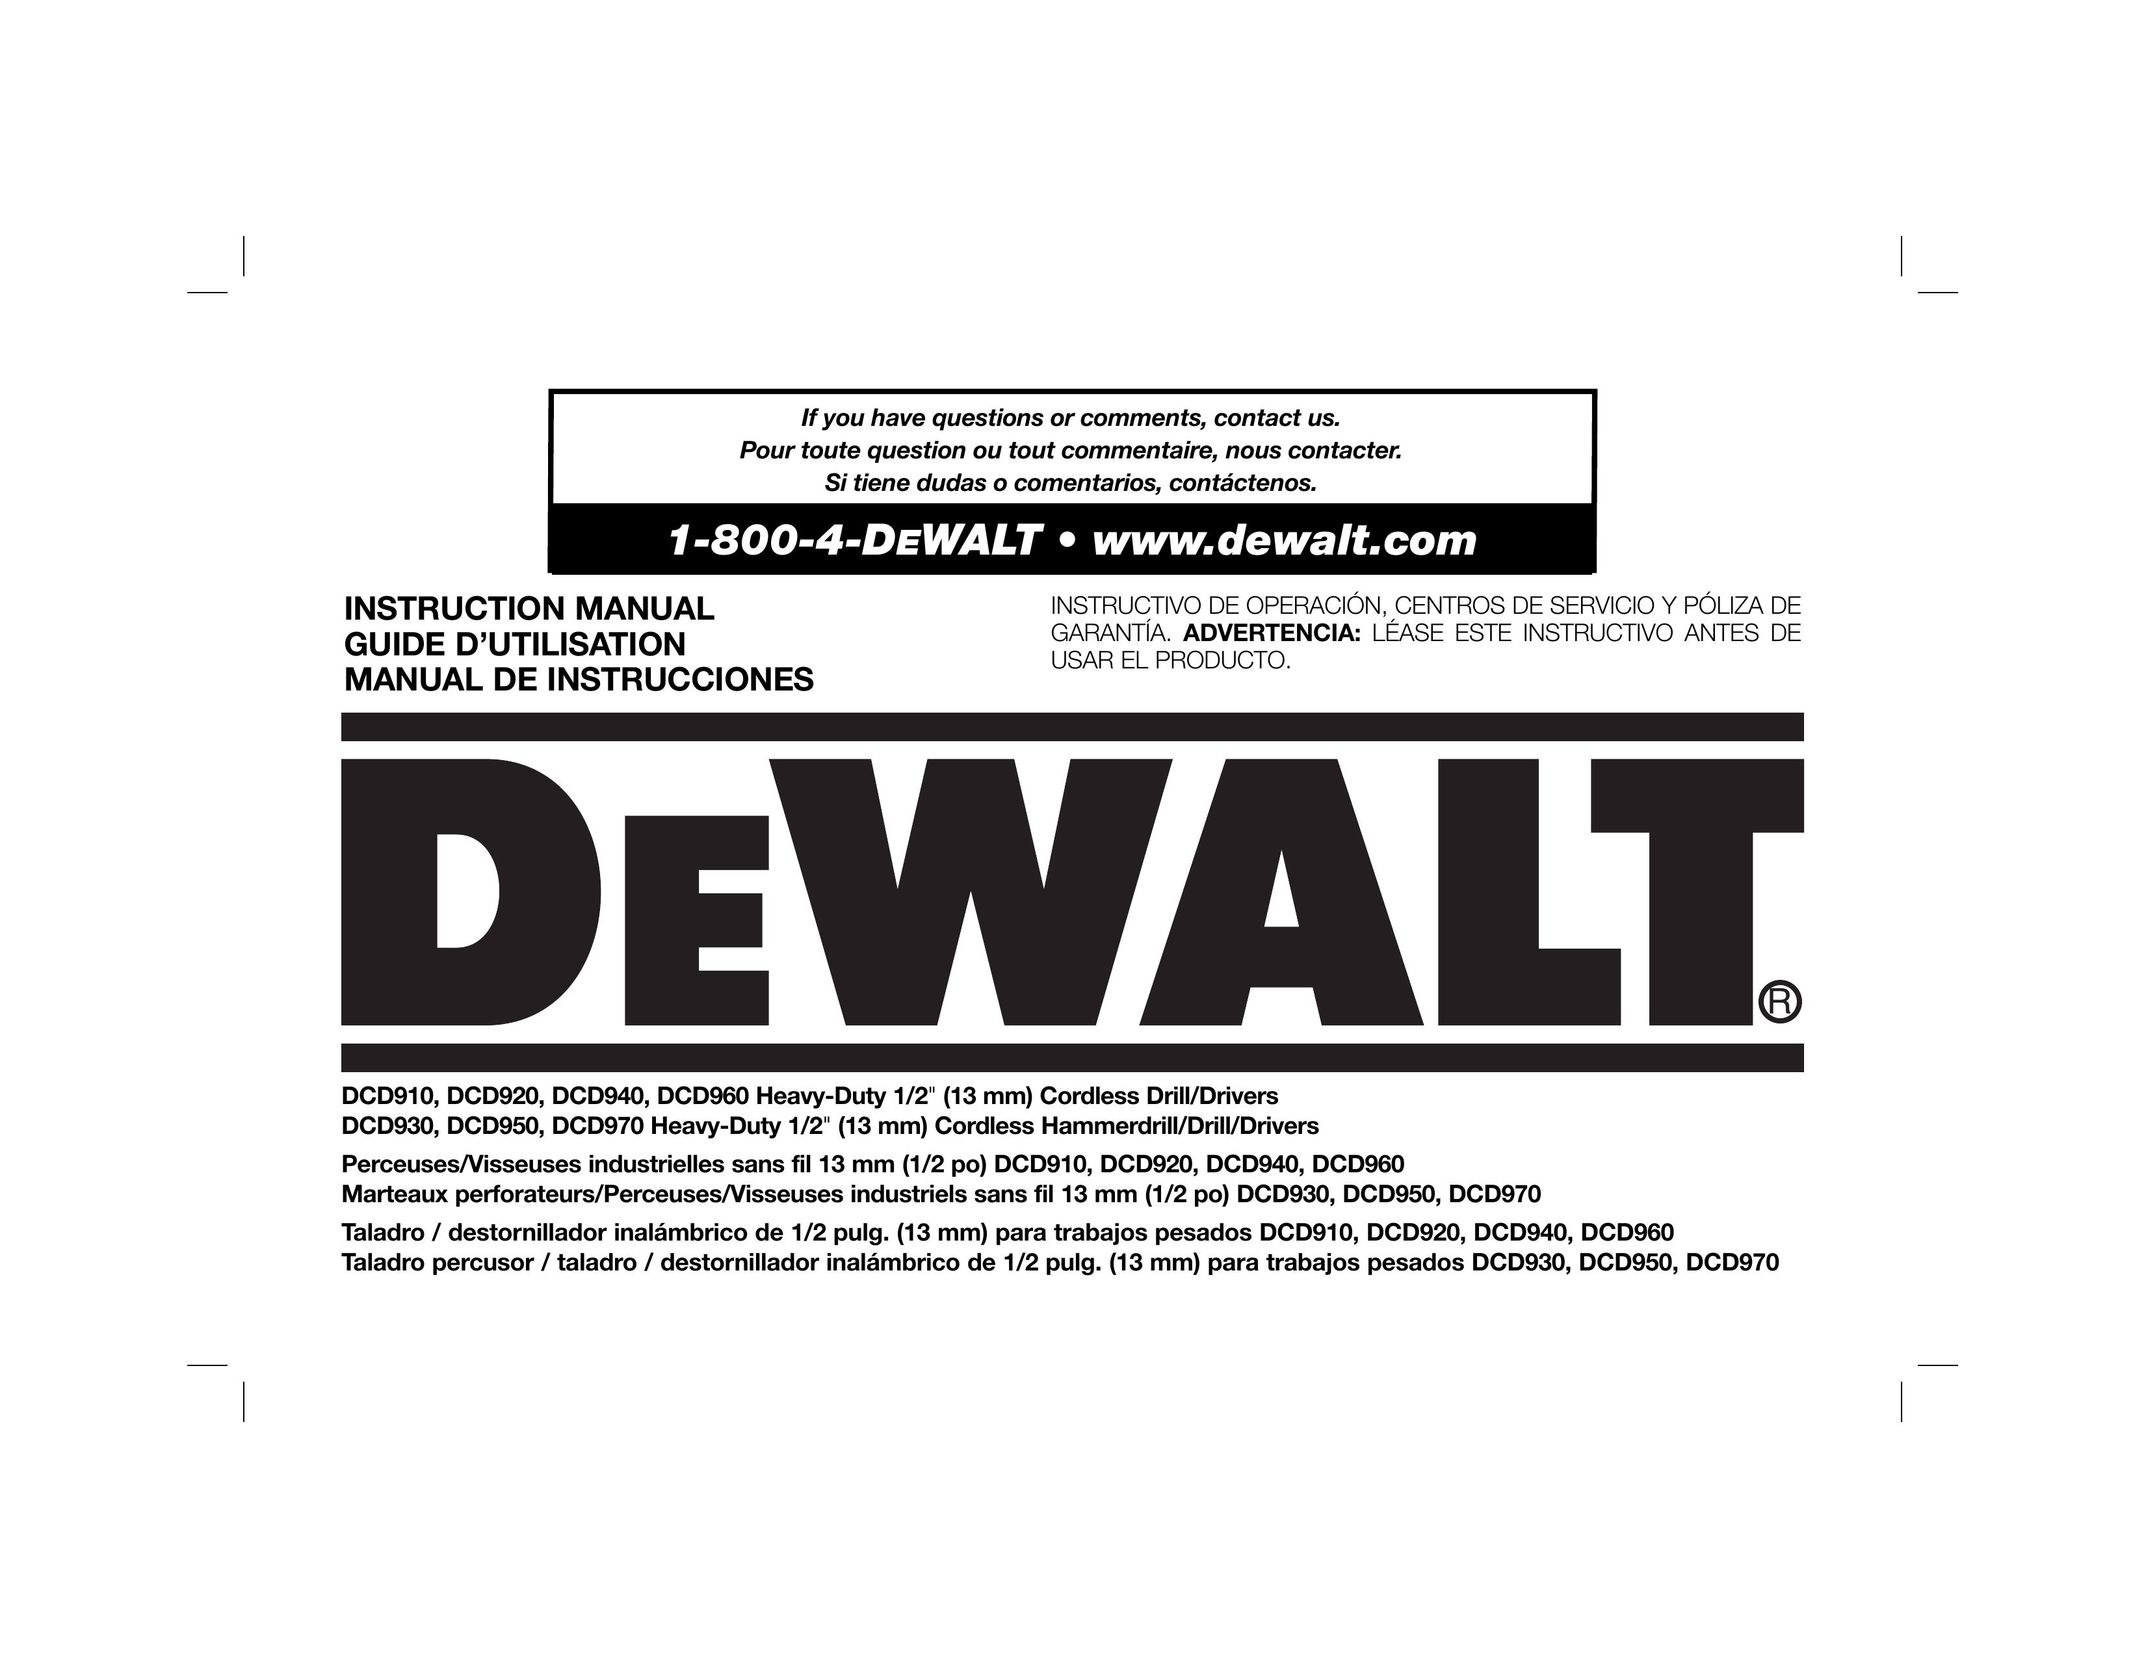 DeWalt DCD930 Cordless Drill User Manual